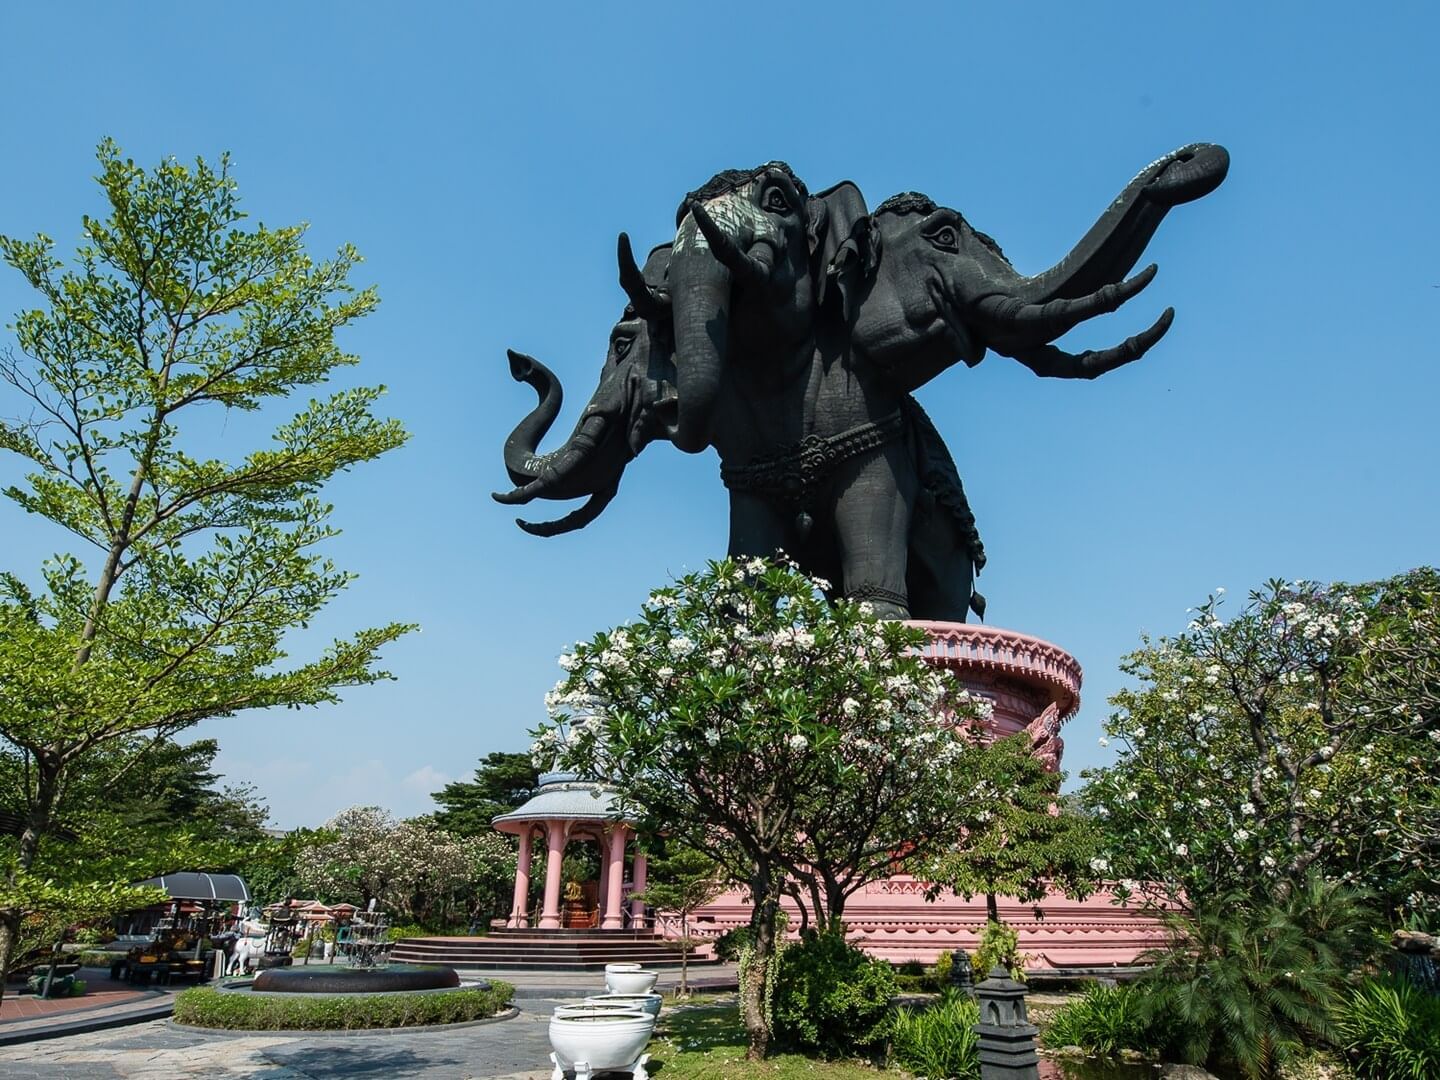 The Royal Elephant National Museum in Bangkok